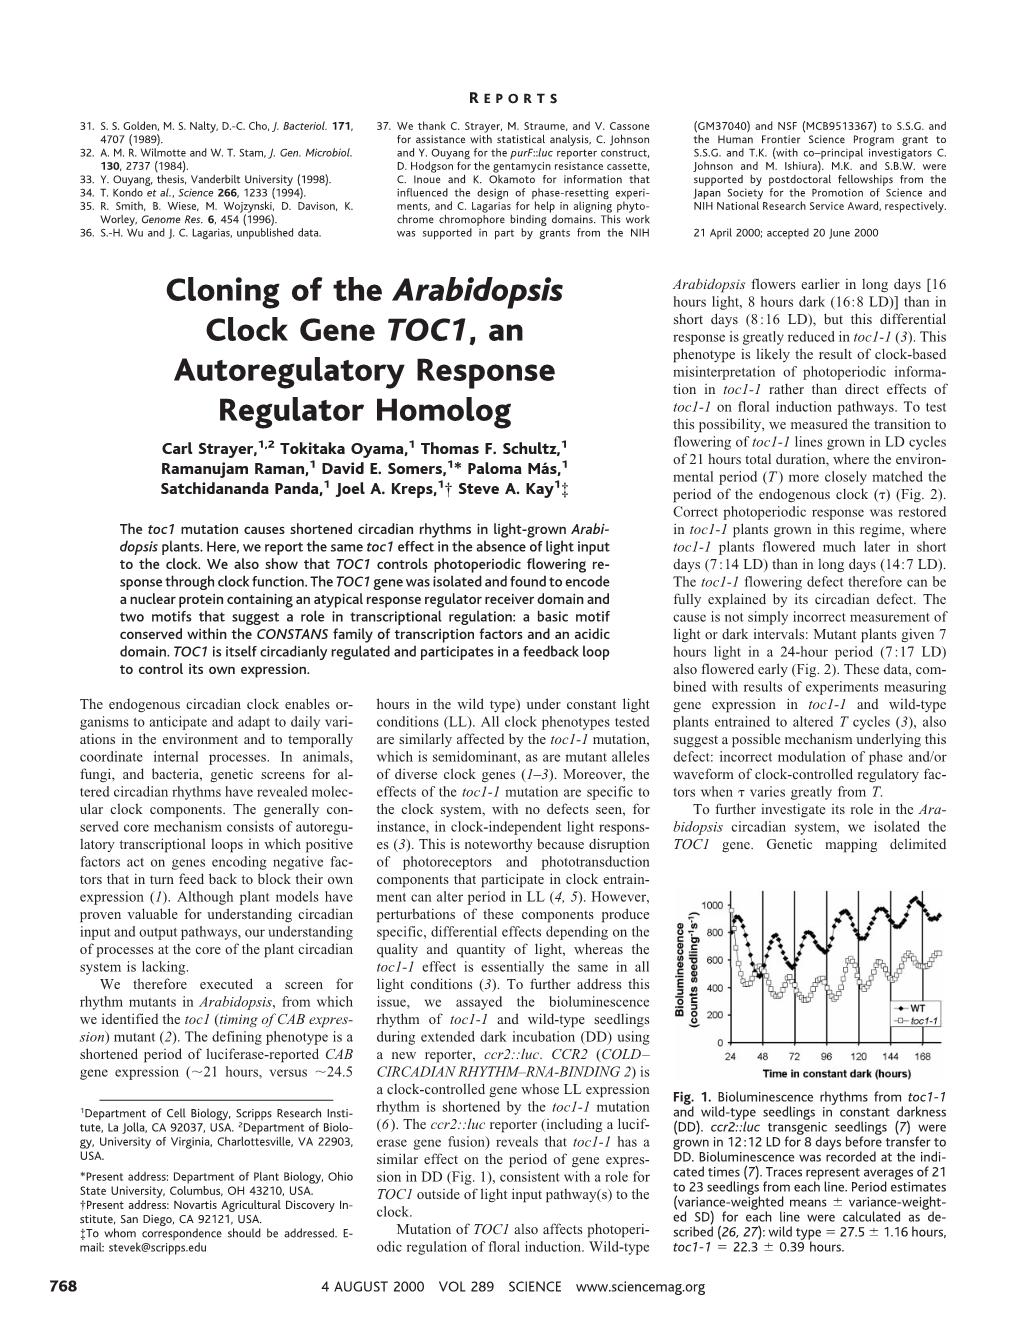 Cloning of the Arabidopsis Clock Gene TOC1, an Autoregulatory